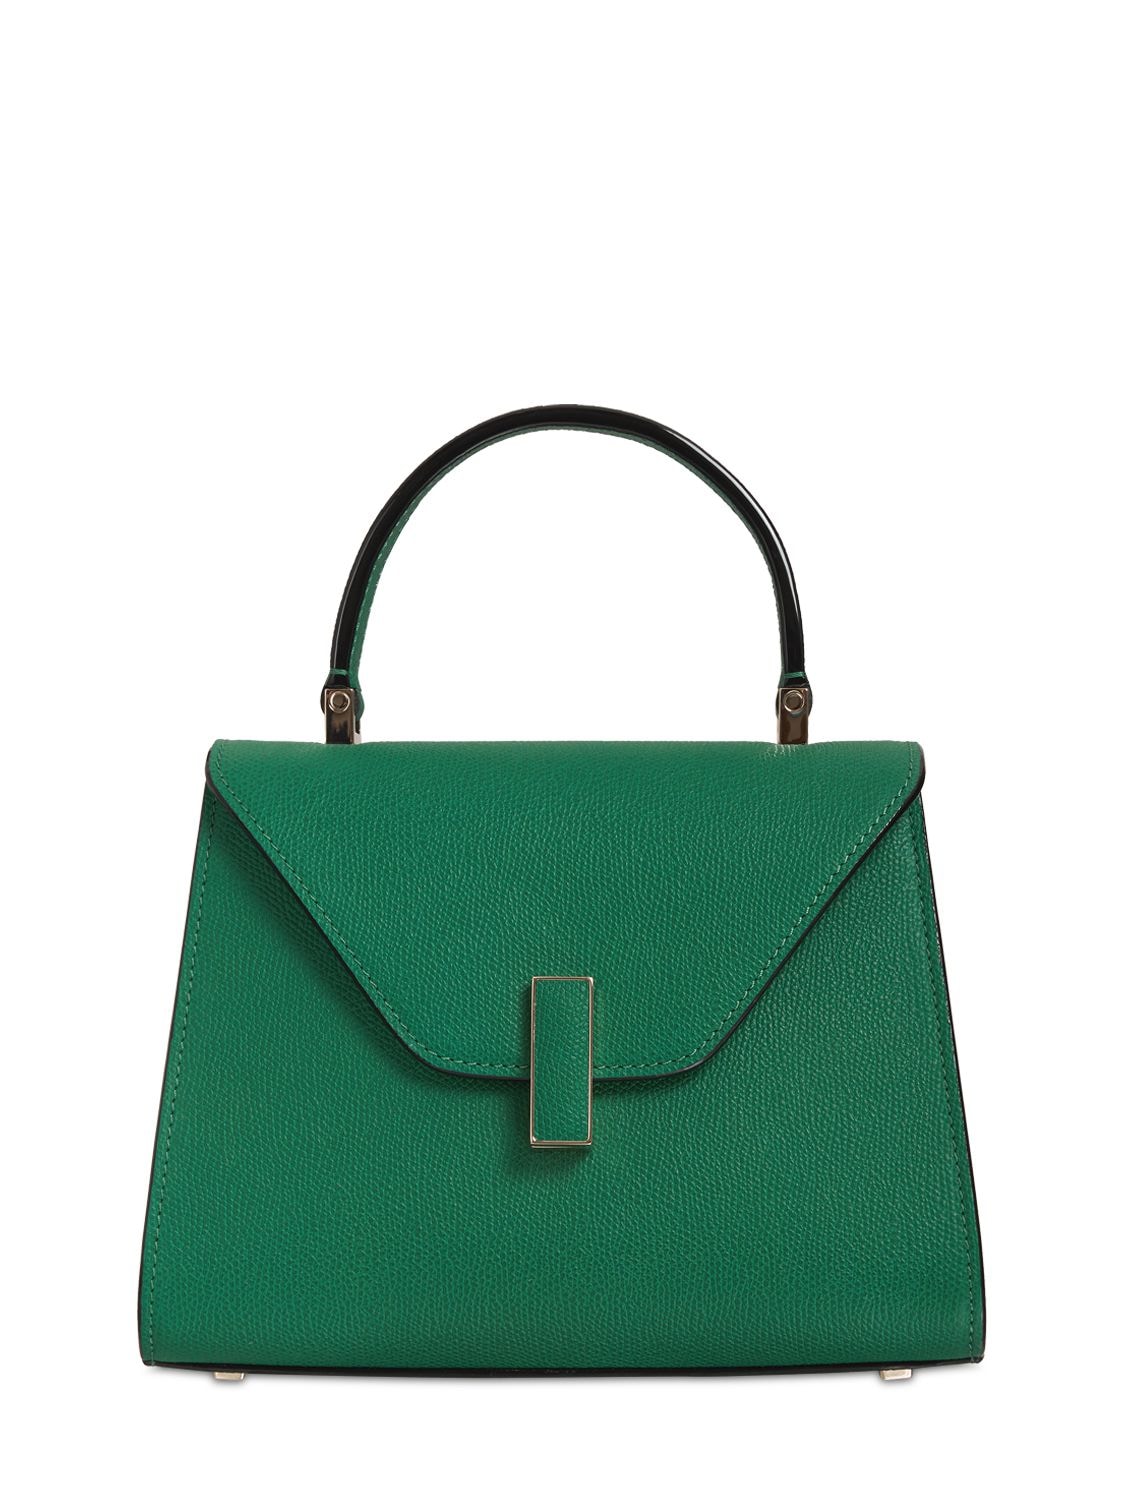 Valextra - Mini iside grained leather bag - Emerald | Luisaviaroma